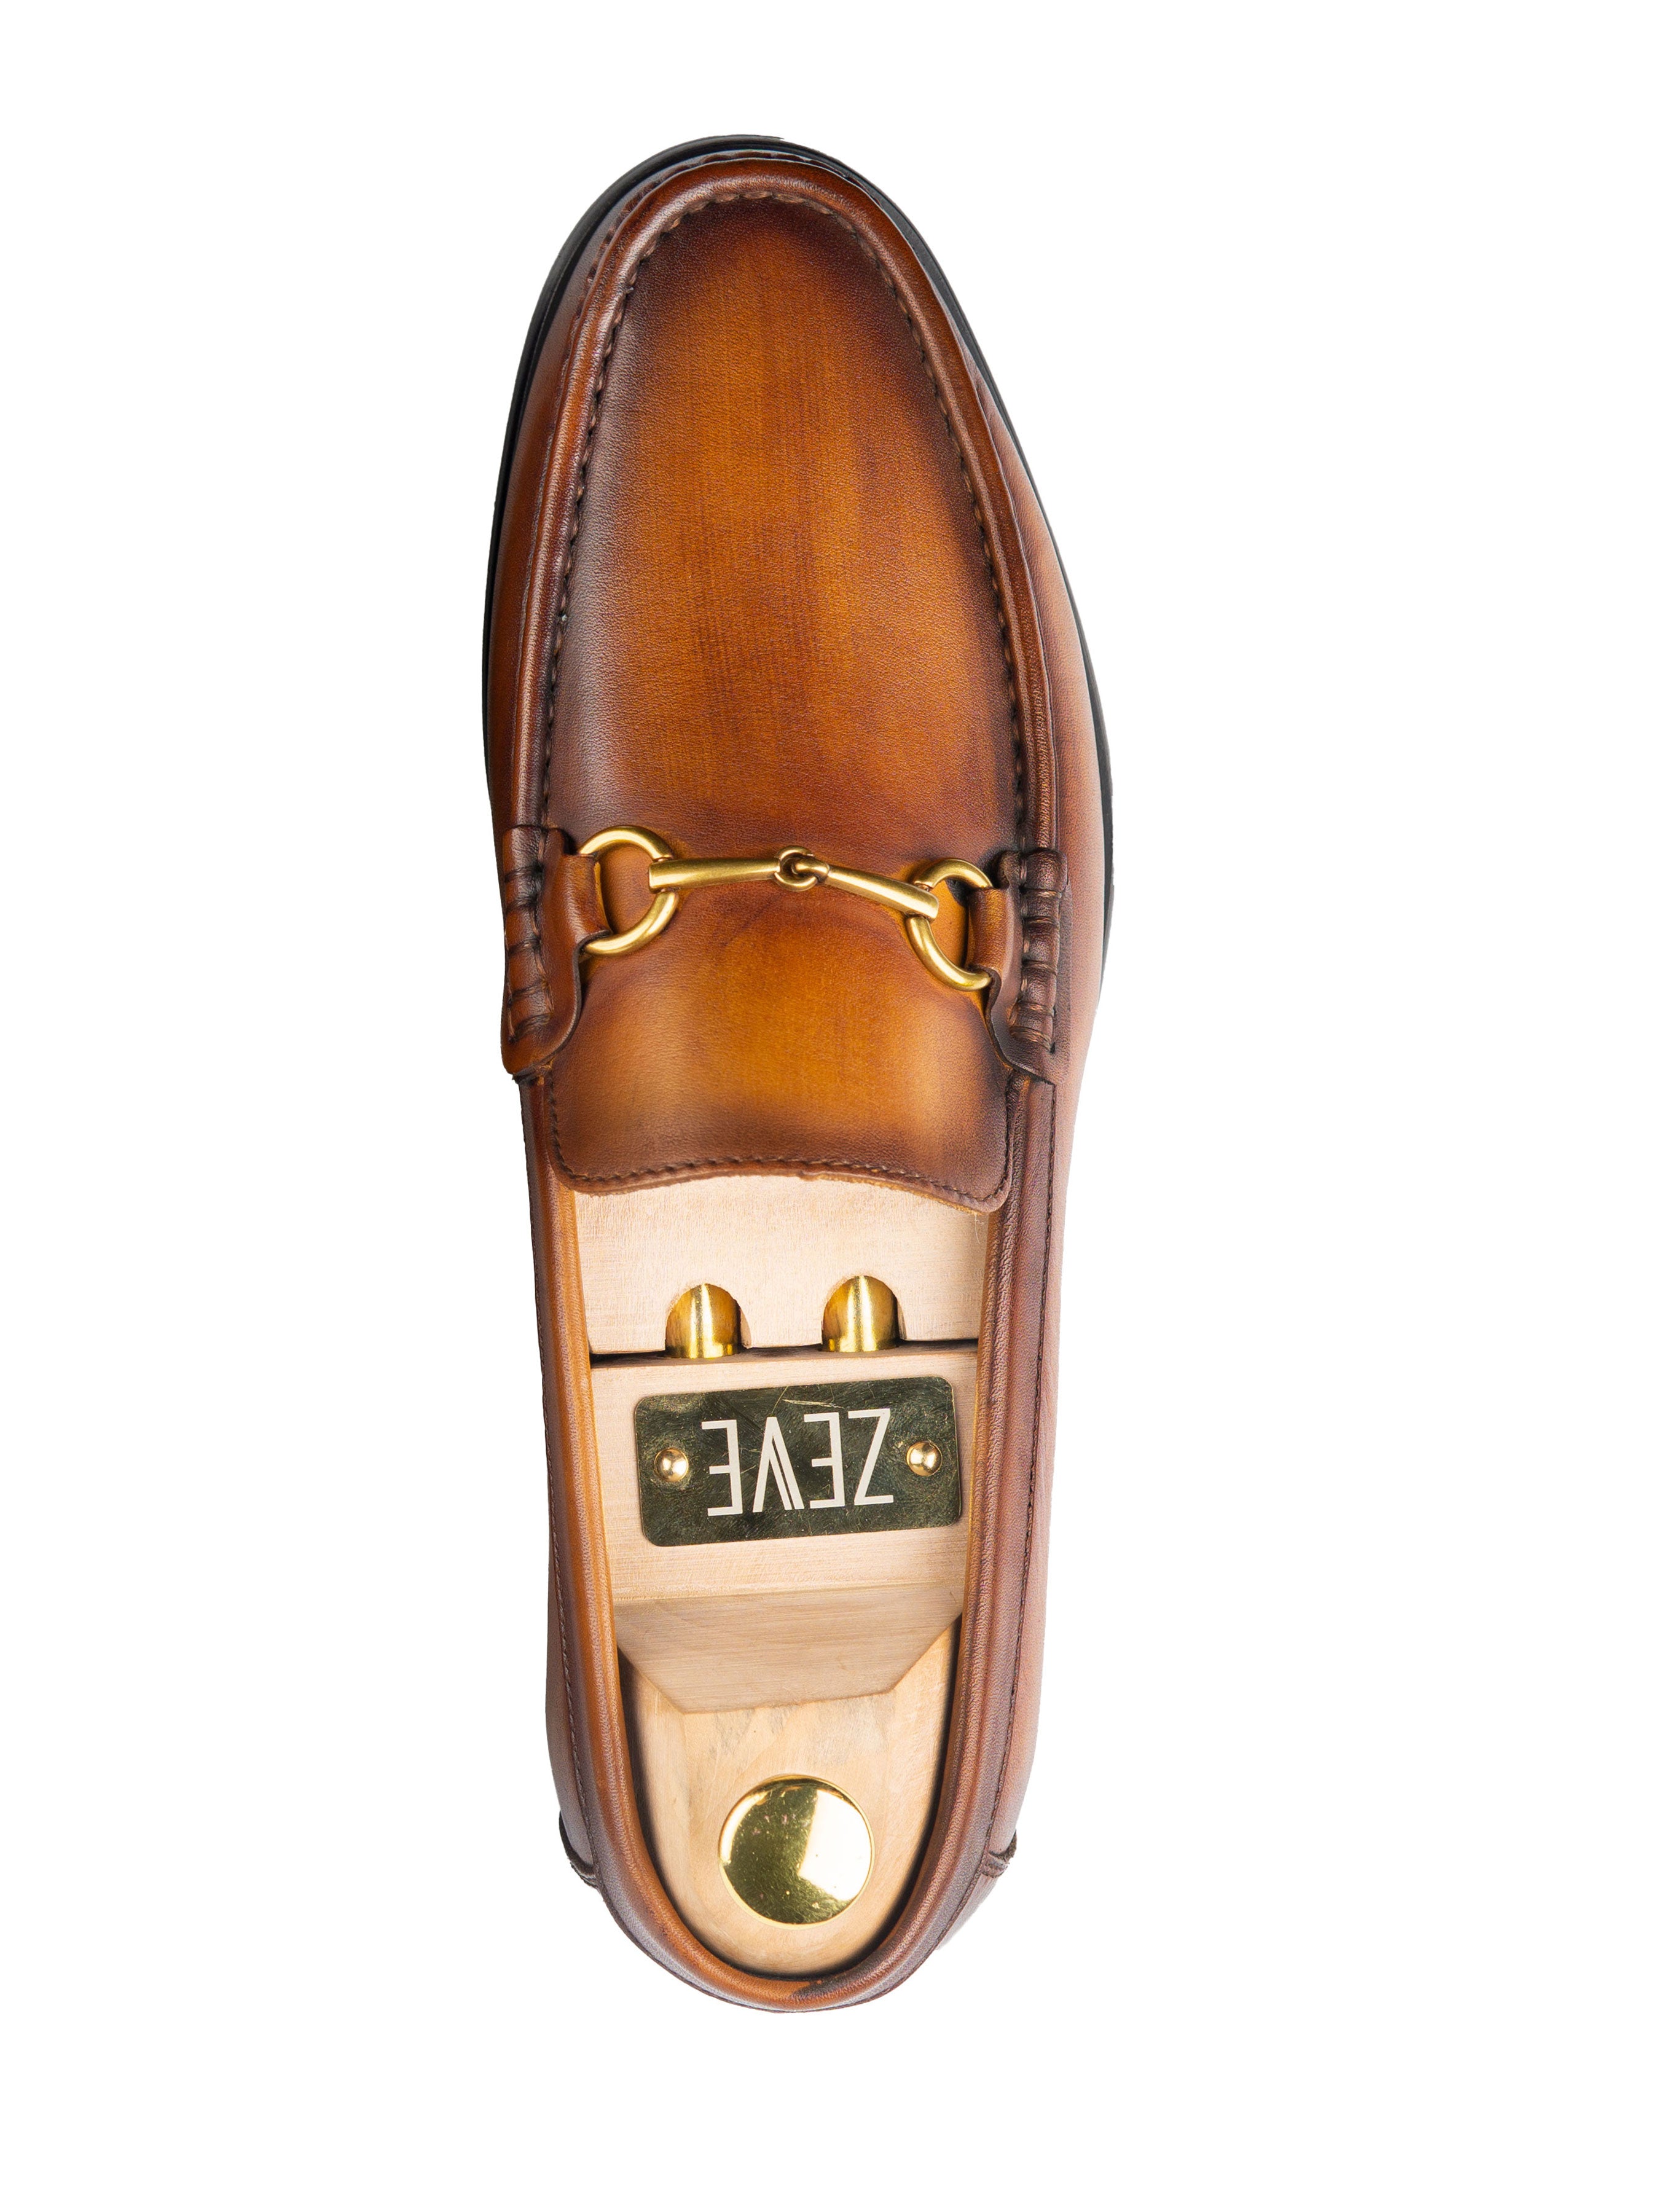 Horsebit Moccasin Loafer - Cognac Tan (Hand Painted Patina) - Zeve Shoes